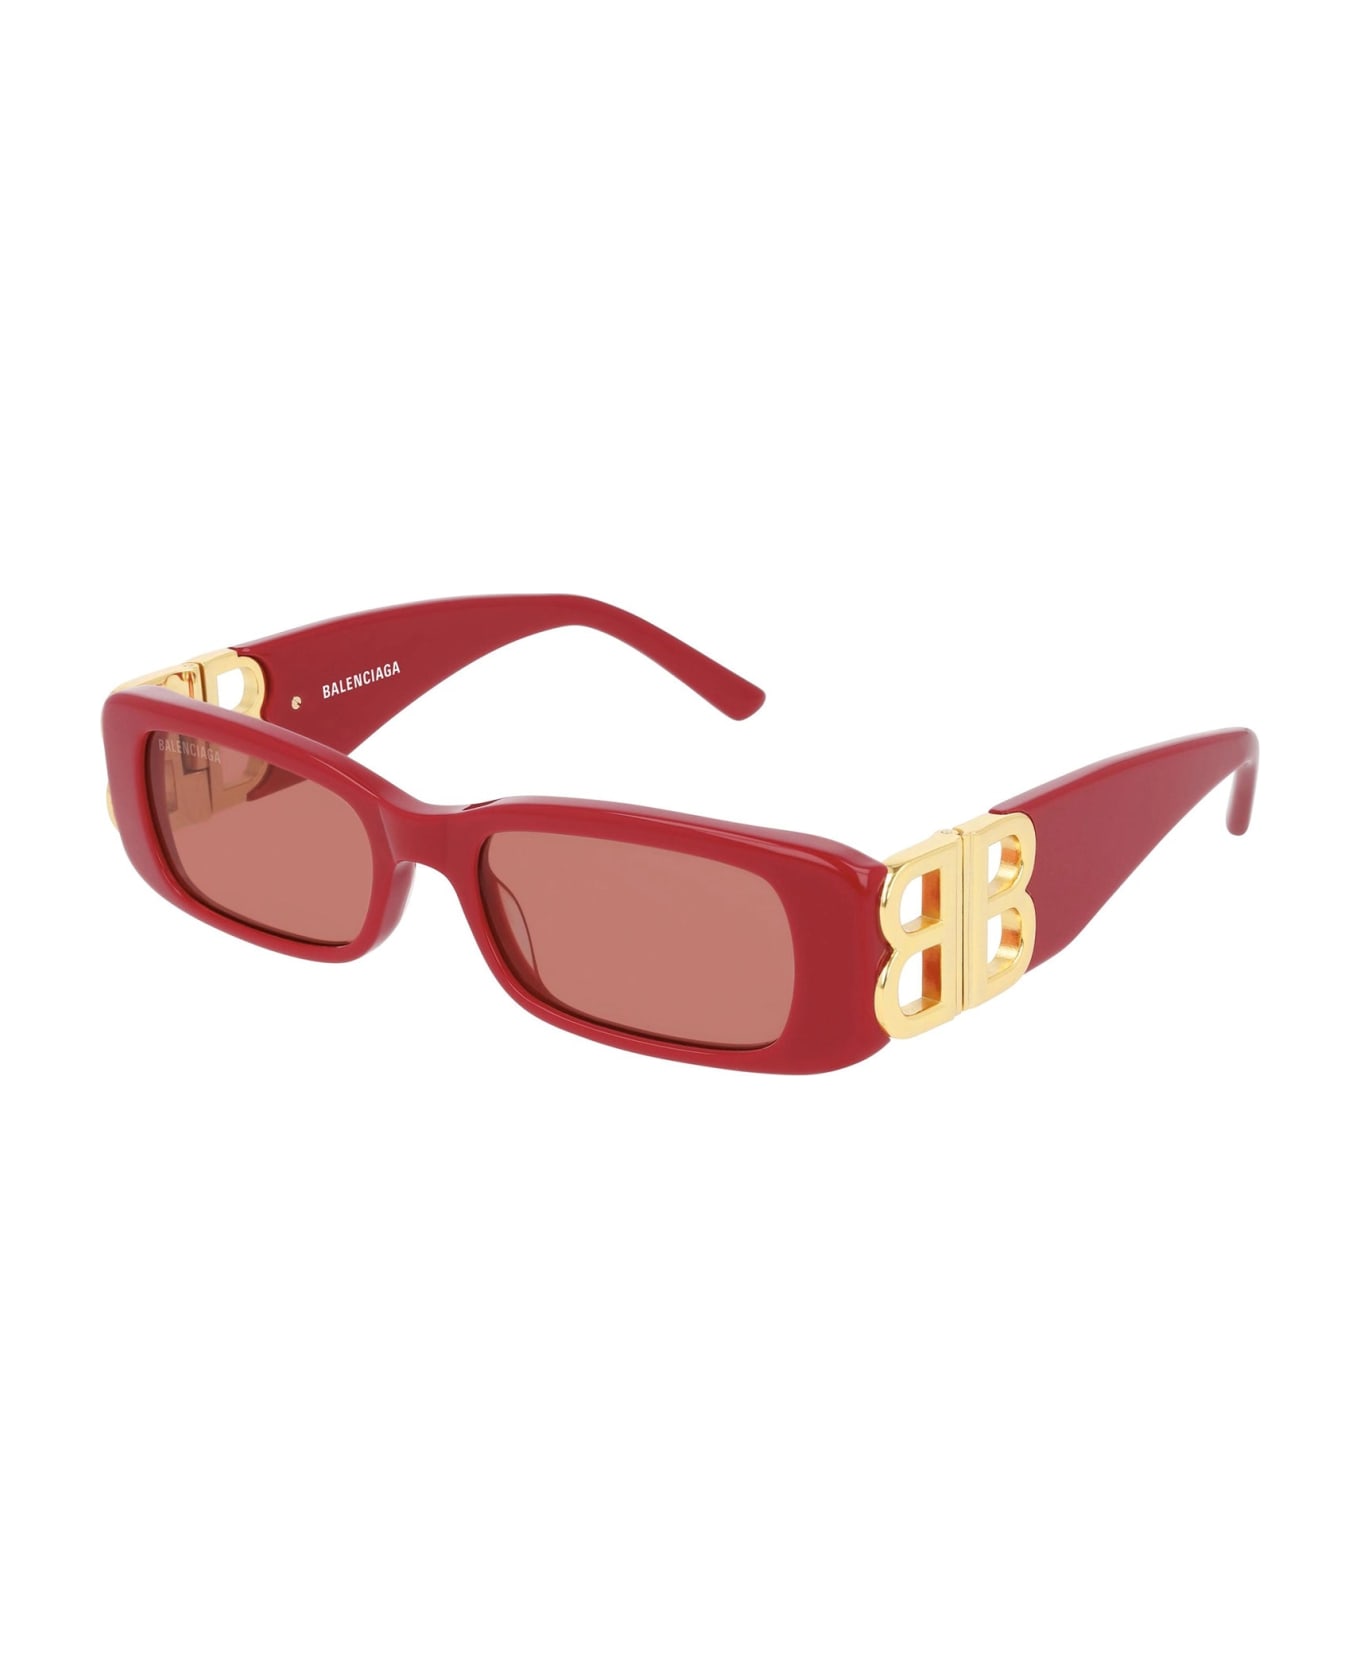 Balenciaga Eyewear Bb0096s Sunglasses - shiny solid red サングラス